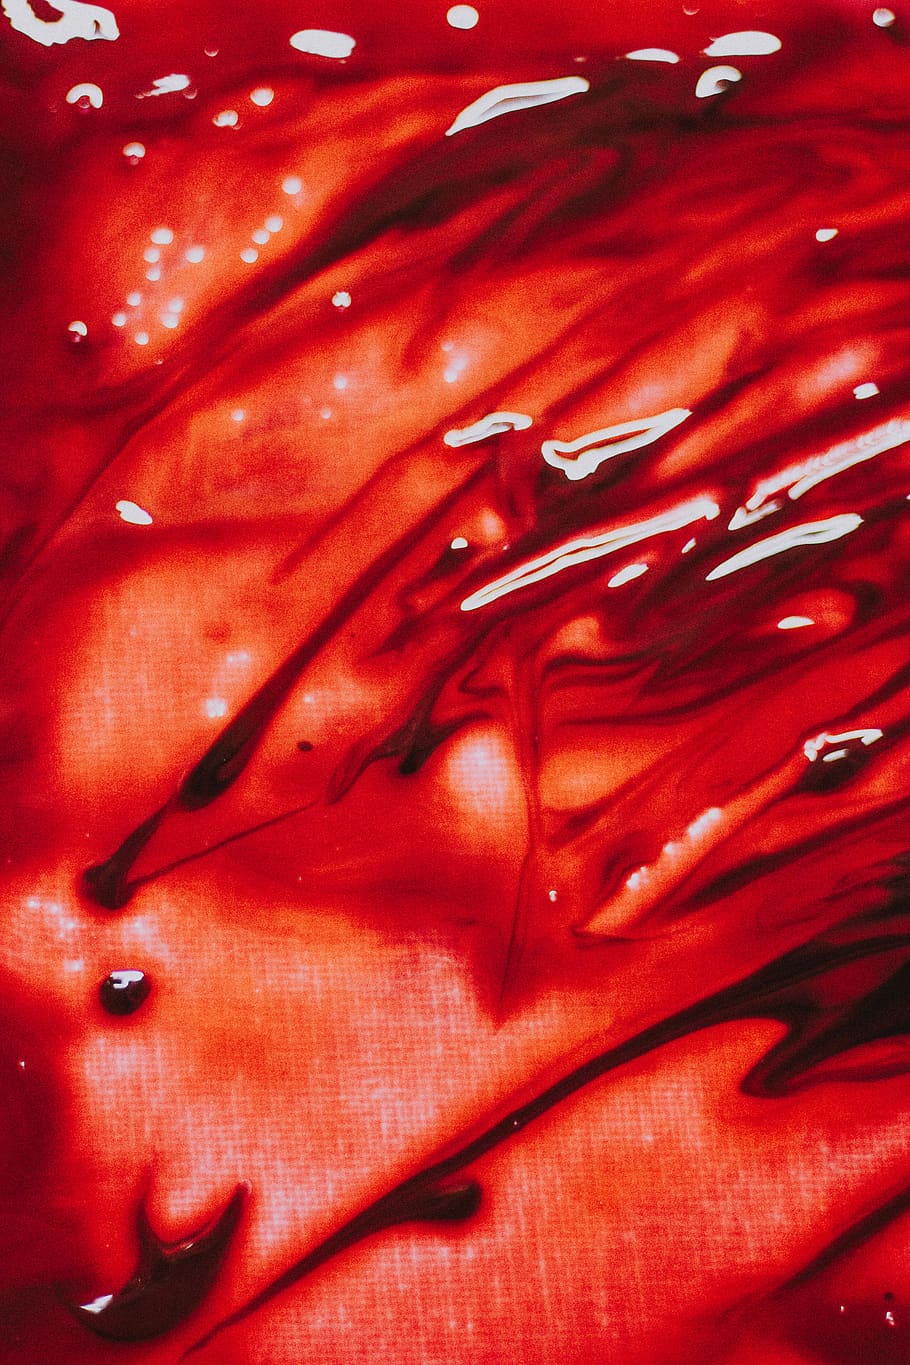 Best 500 Blood Wallpapers  Download Free Images on Unsplash